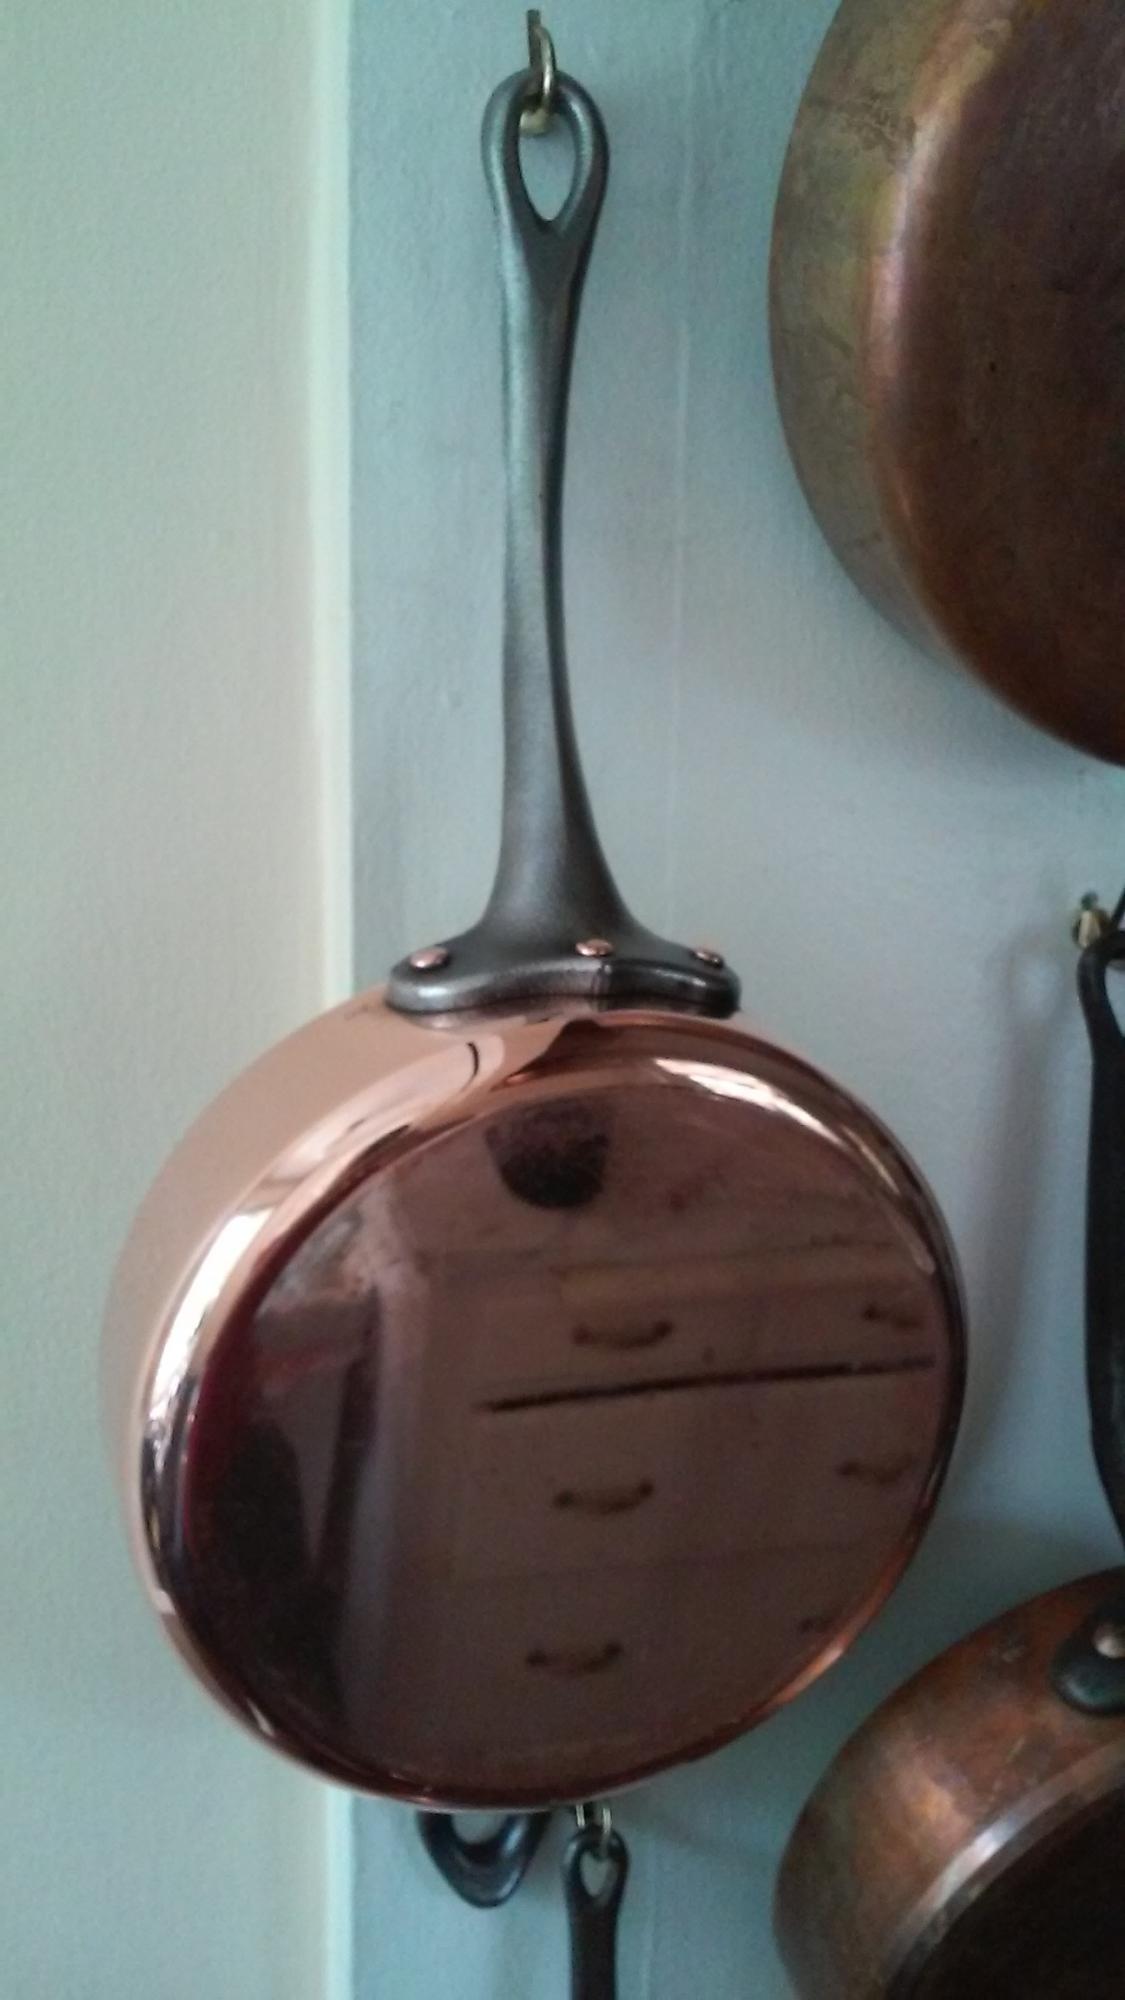 The 9.5 Inch Sauté – Brooklyn Copper Cookware